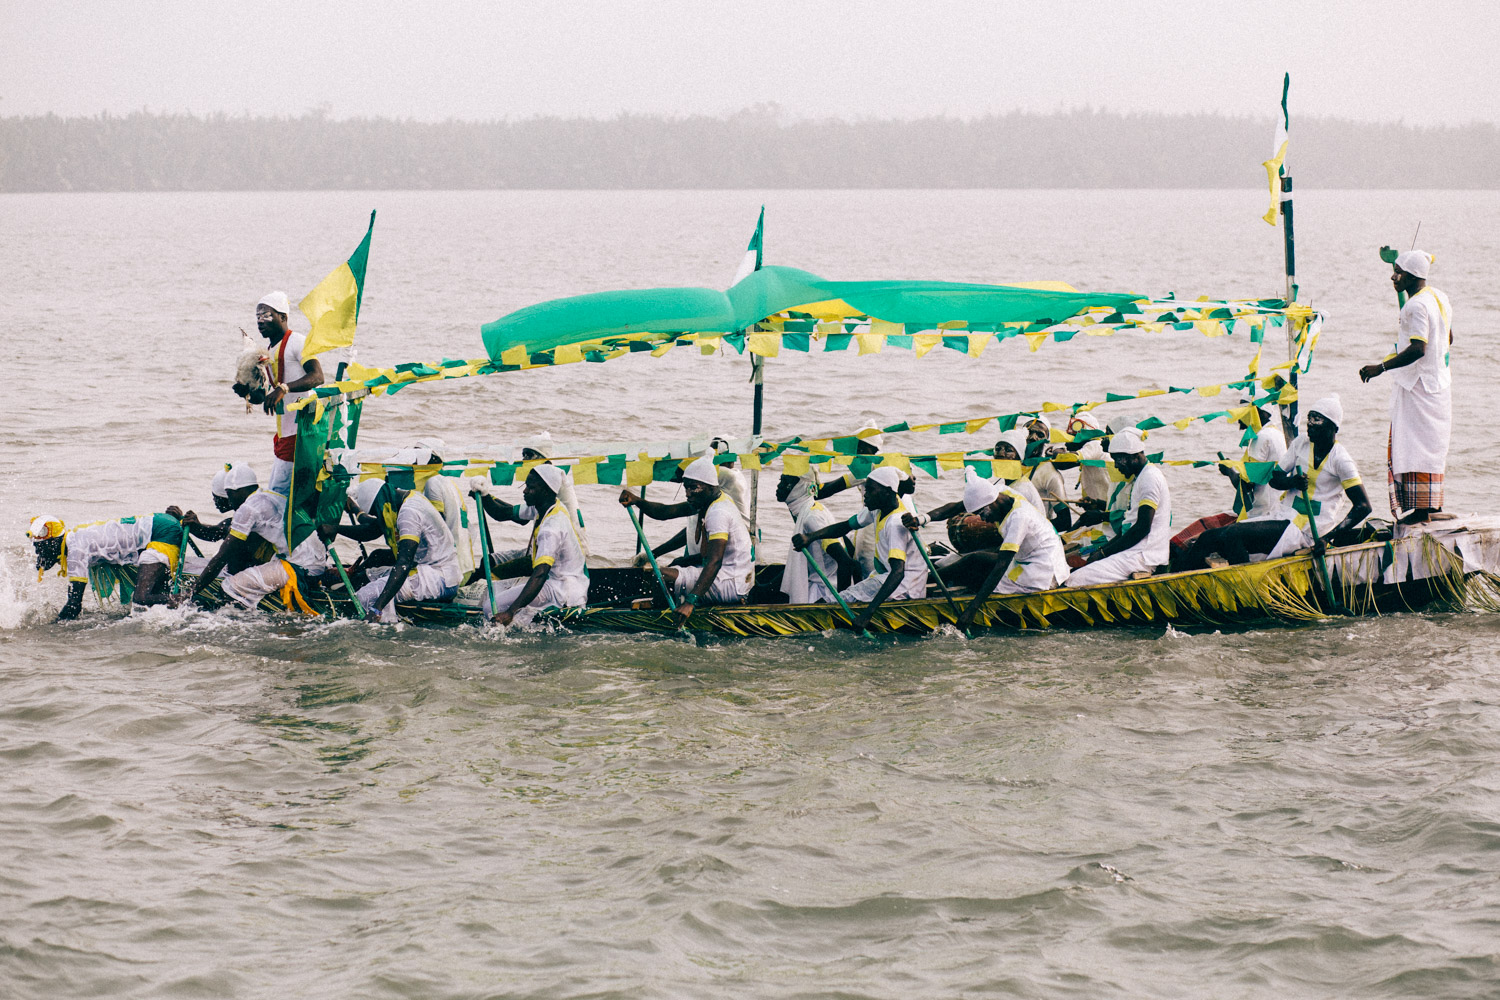 Men Rowing, Opobo Boat Regatta Festival